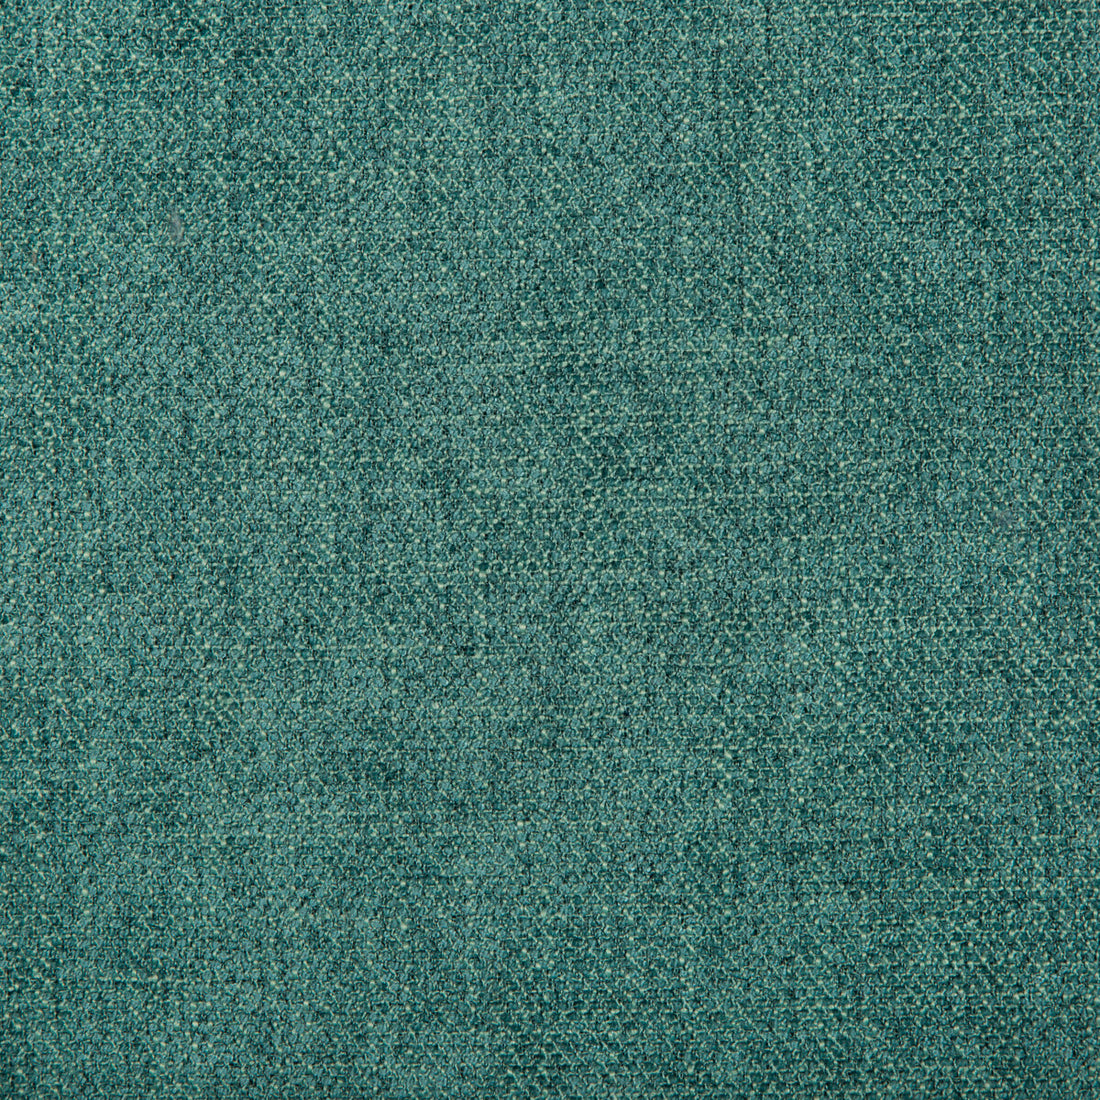 Kf Smt fabric - pattern 35060.135.0 - by Kravet Smart in the Performance Kravetarmor collection